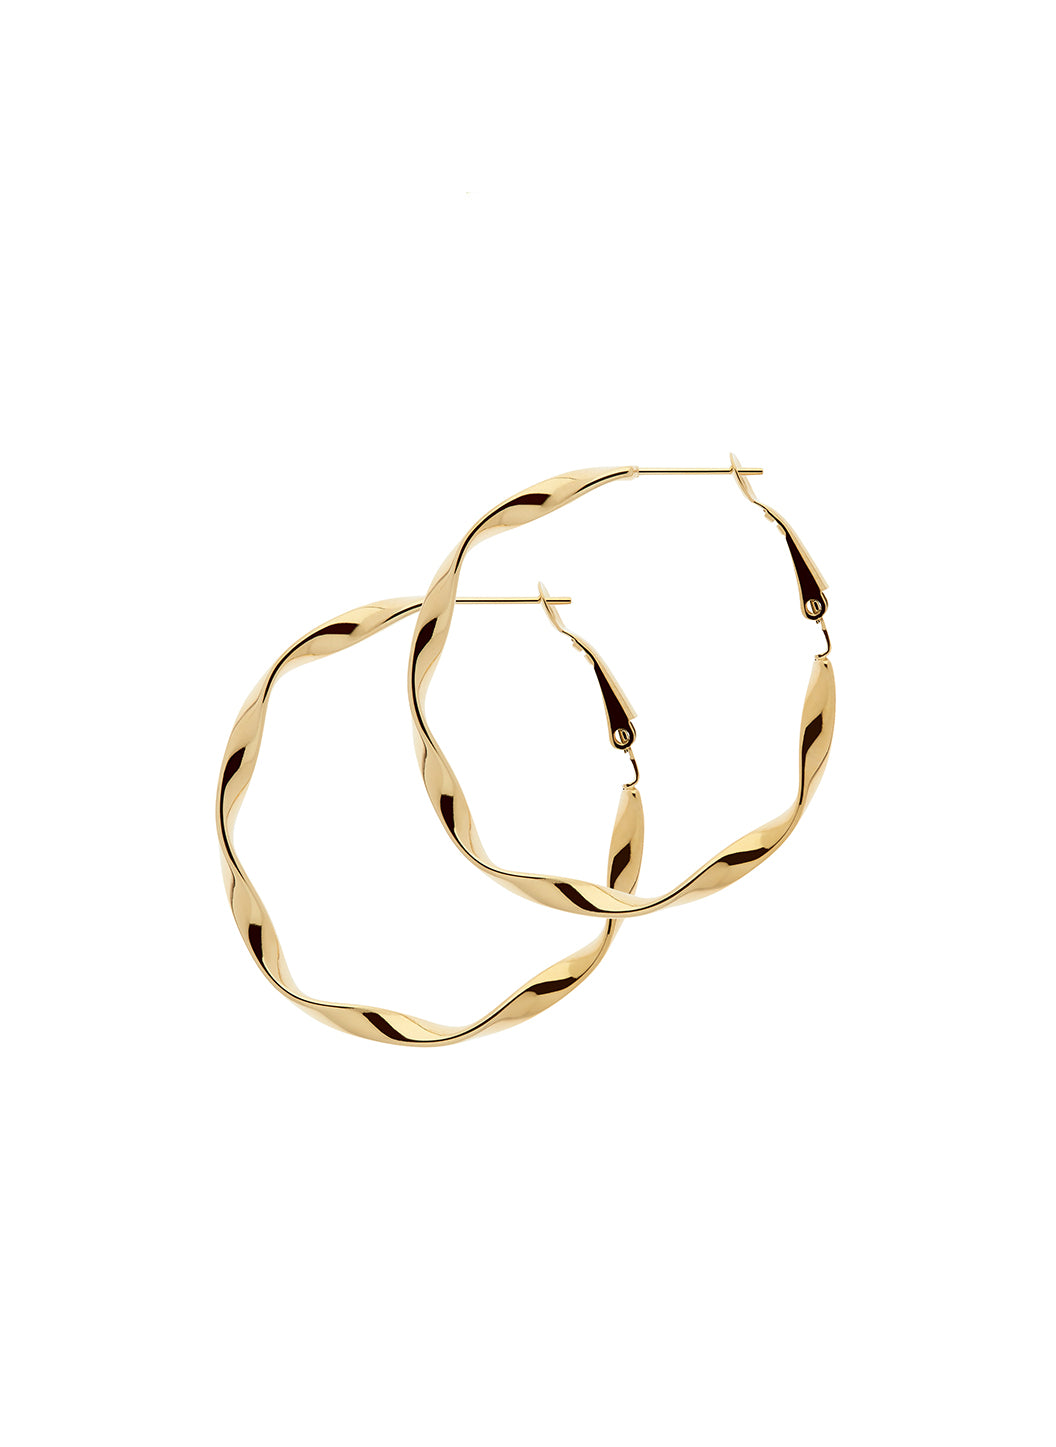 Gold Twist Hoop Earrings-2024